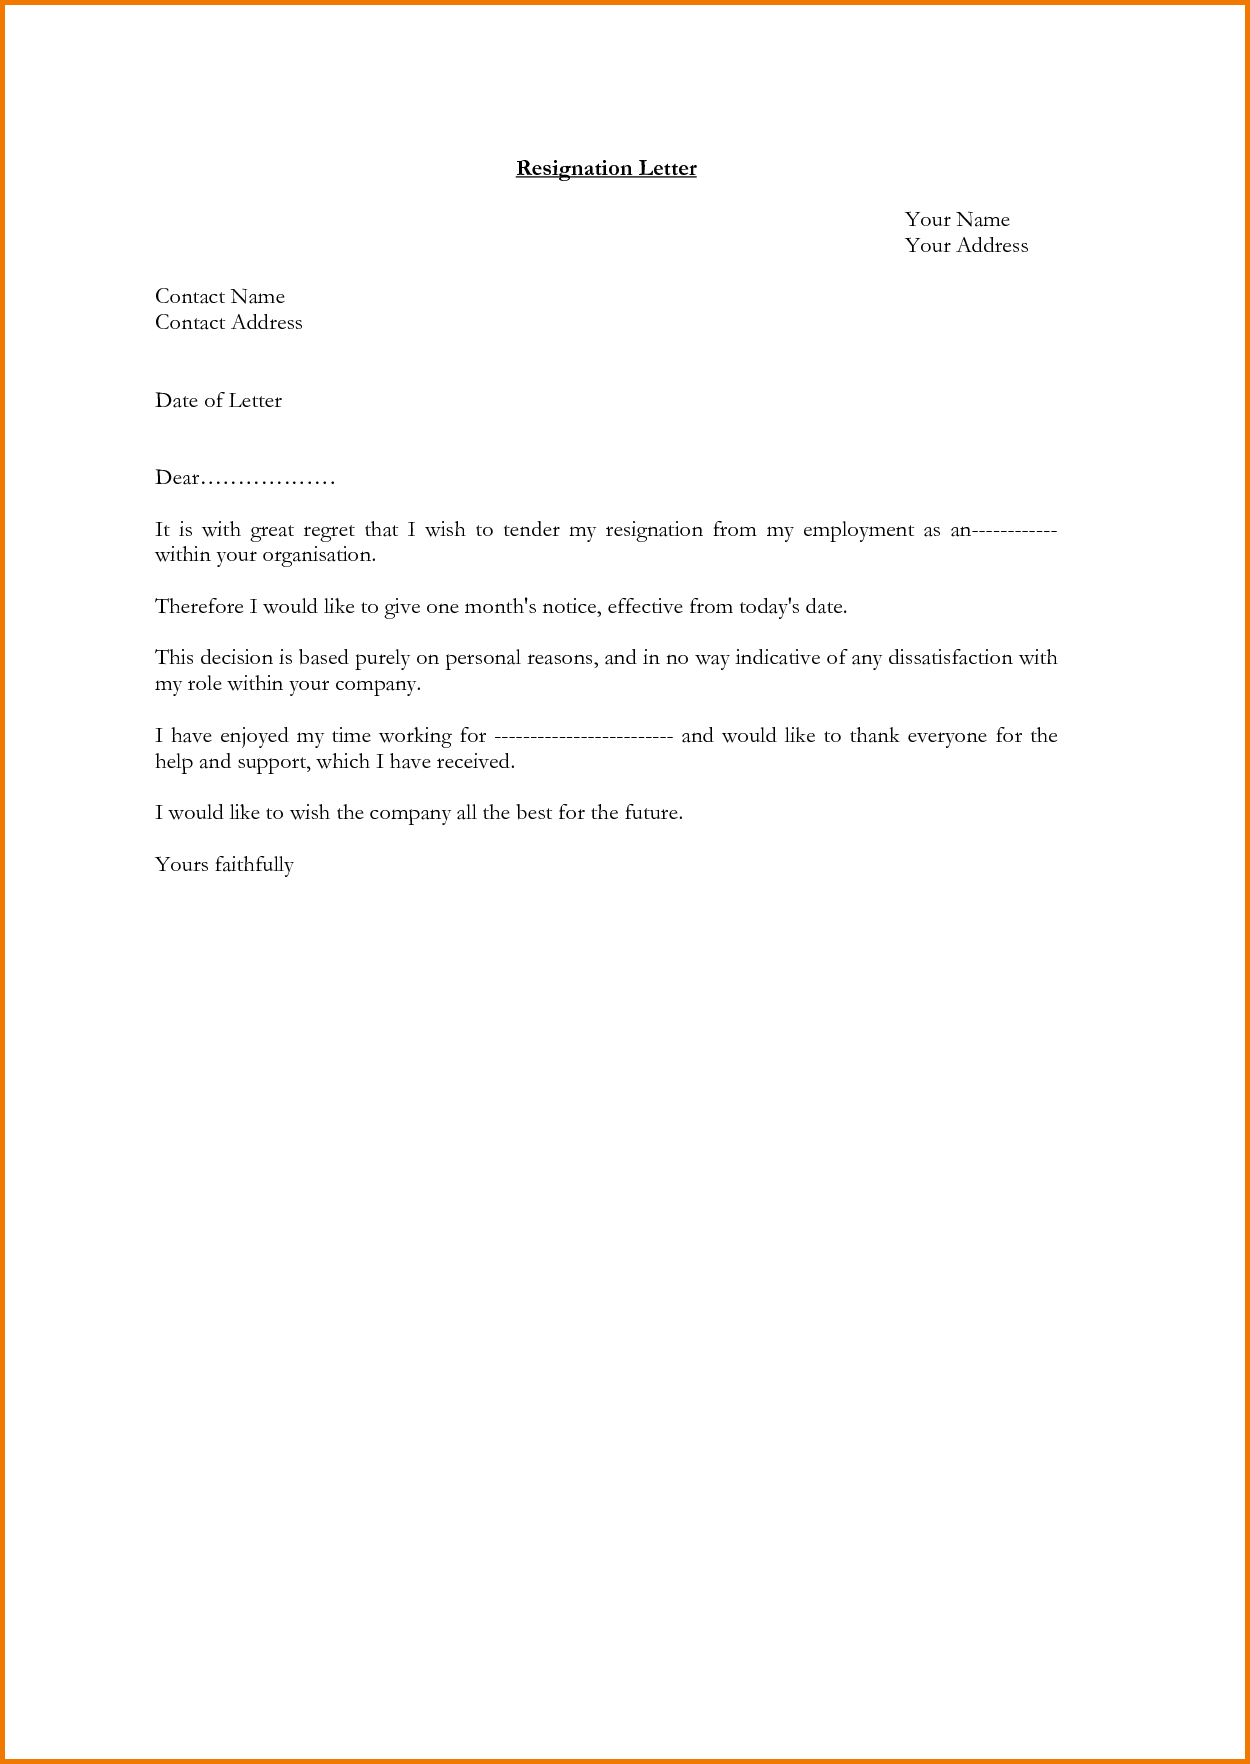 Microsoft Word Resignation Letter Template - Best Board Directors Resignation Letter Template